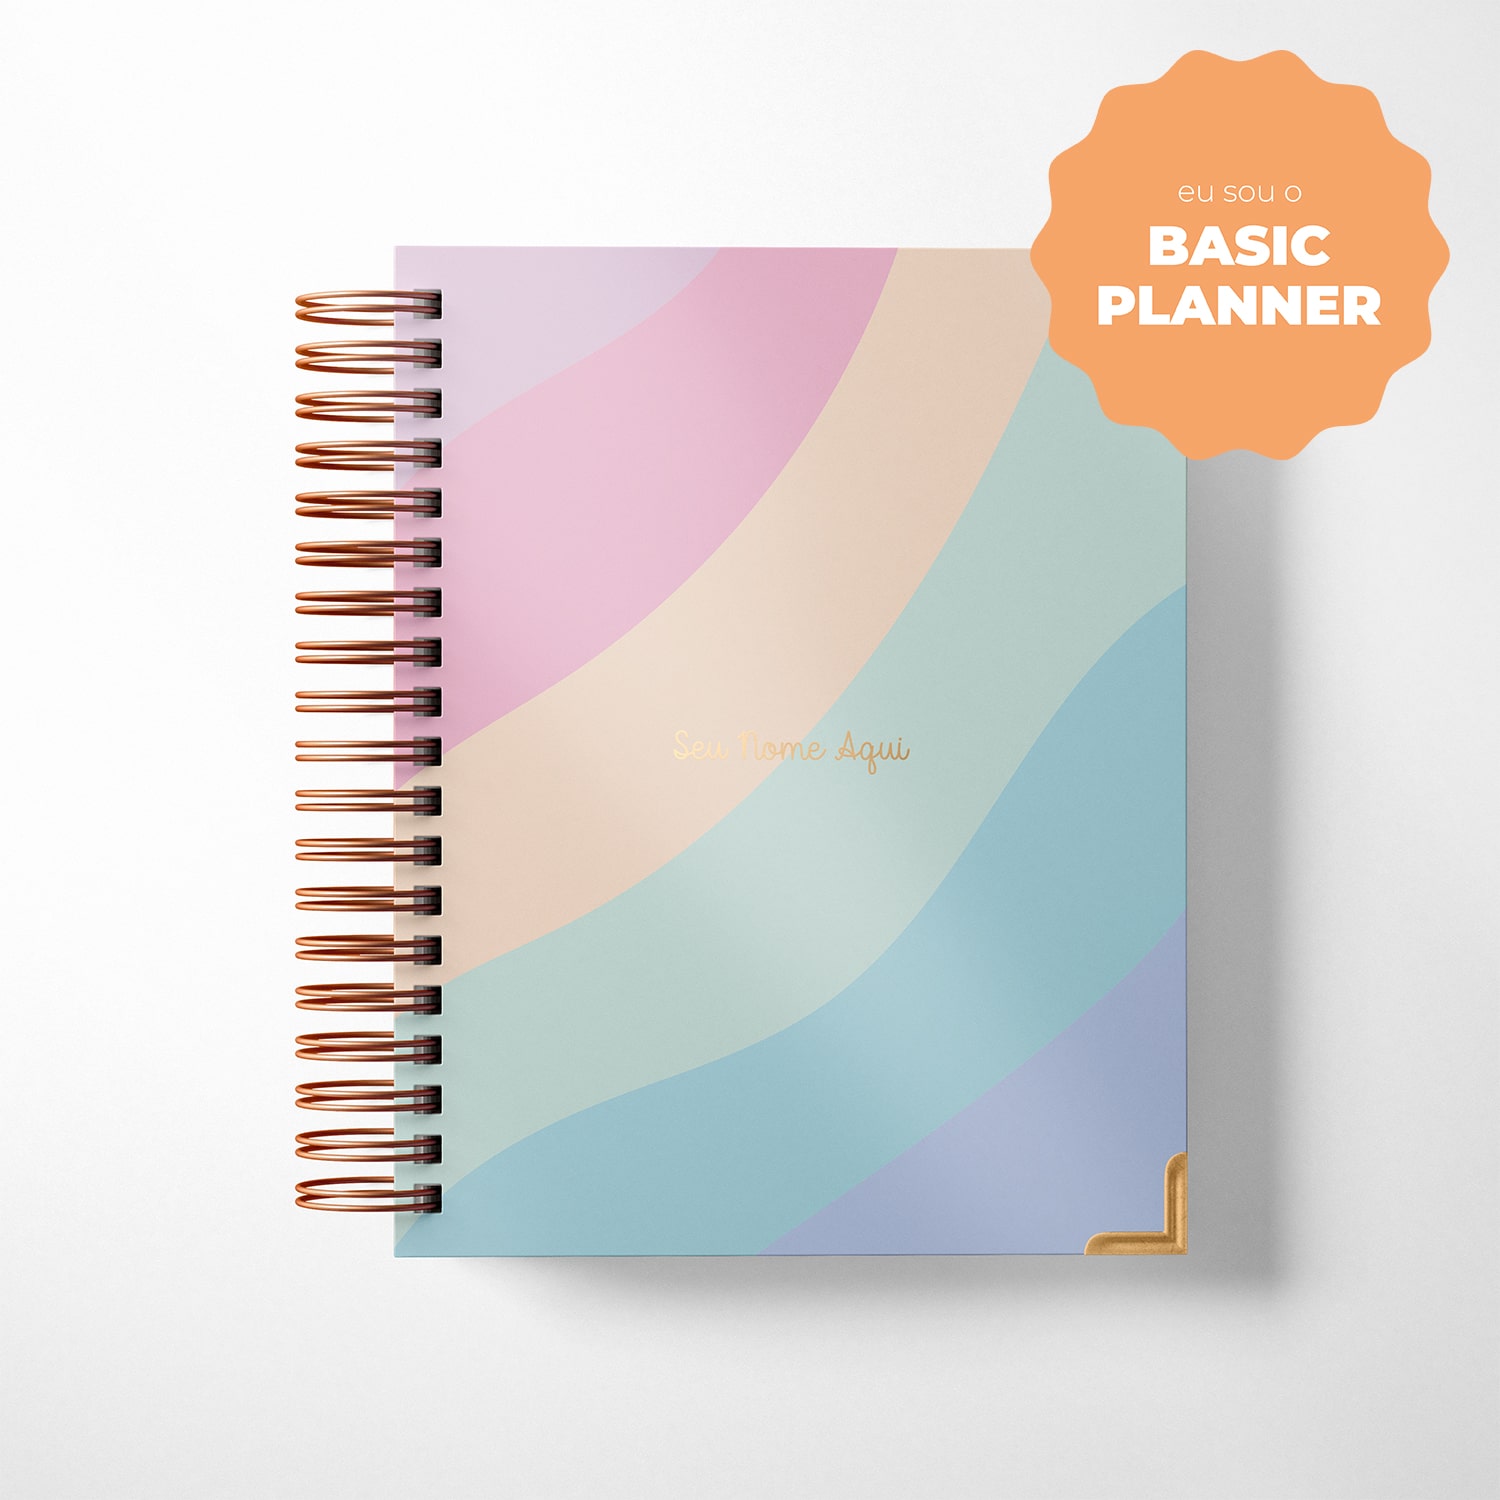 Basic Planner personalizado - Arco-íris